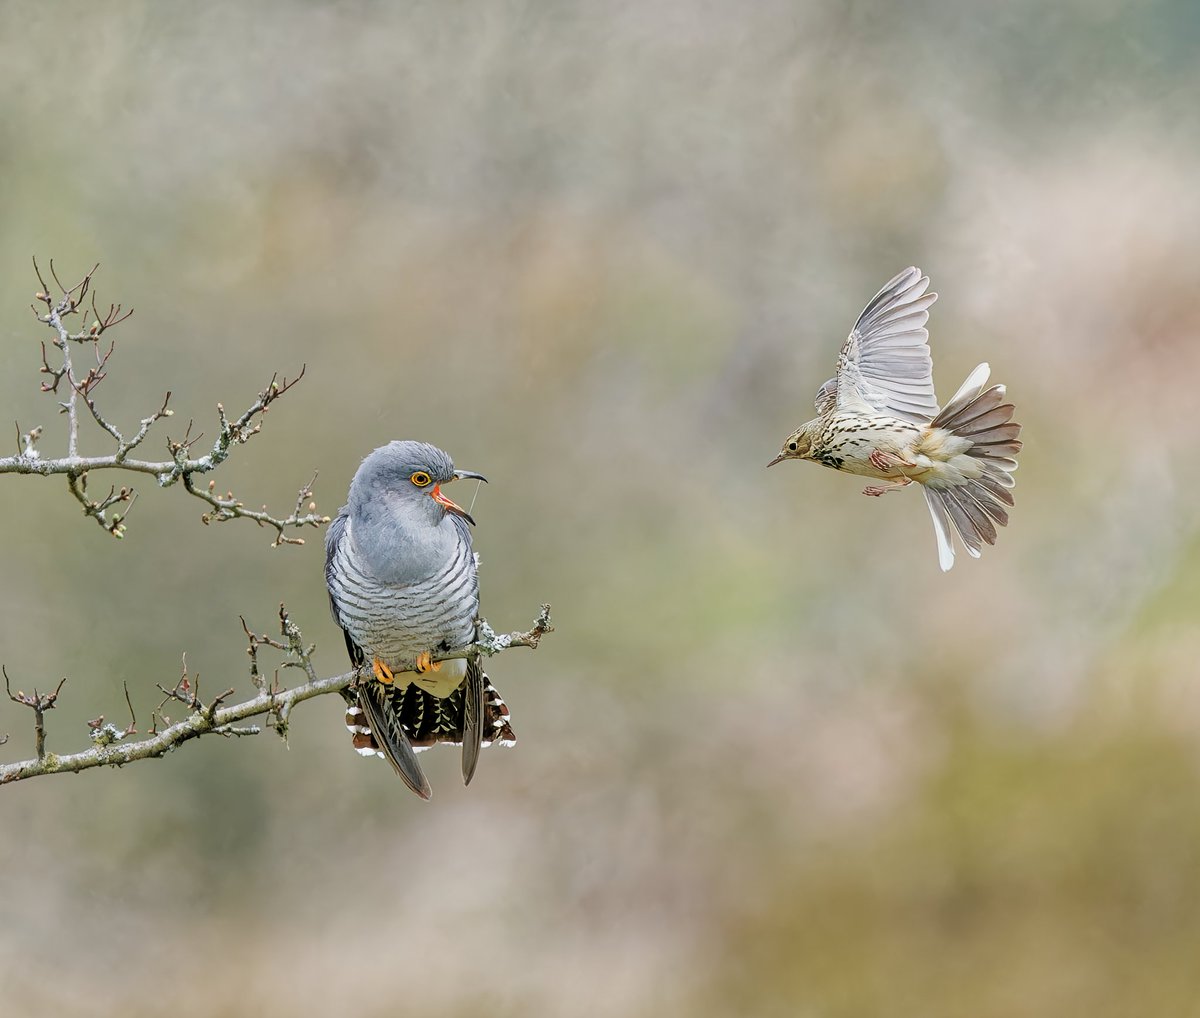 Cuckoo being harassed by A Meadow Pipit on Fartmoor last week #Cuckoo